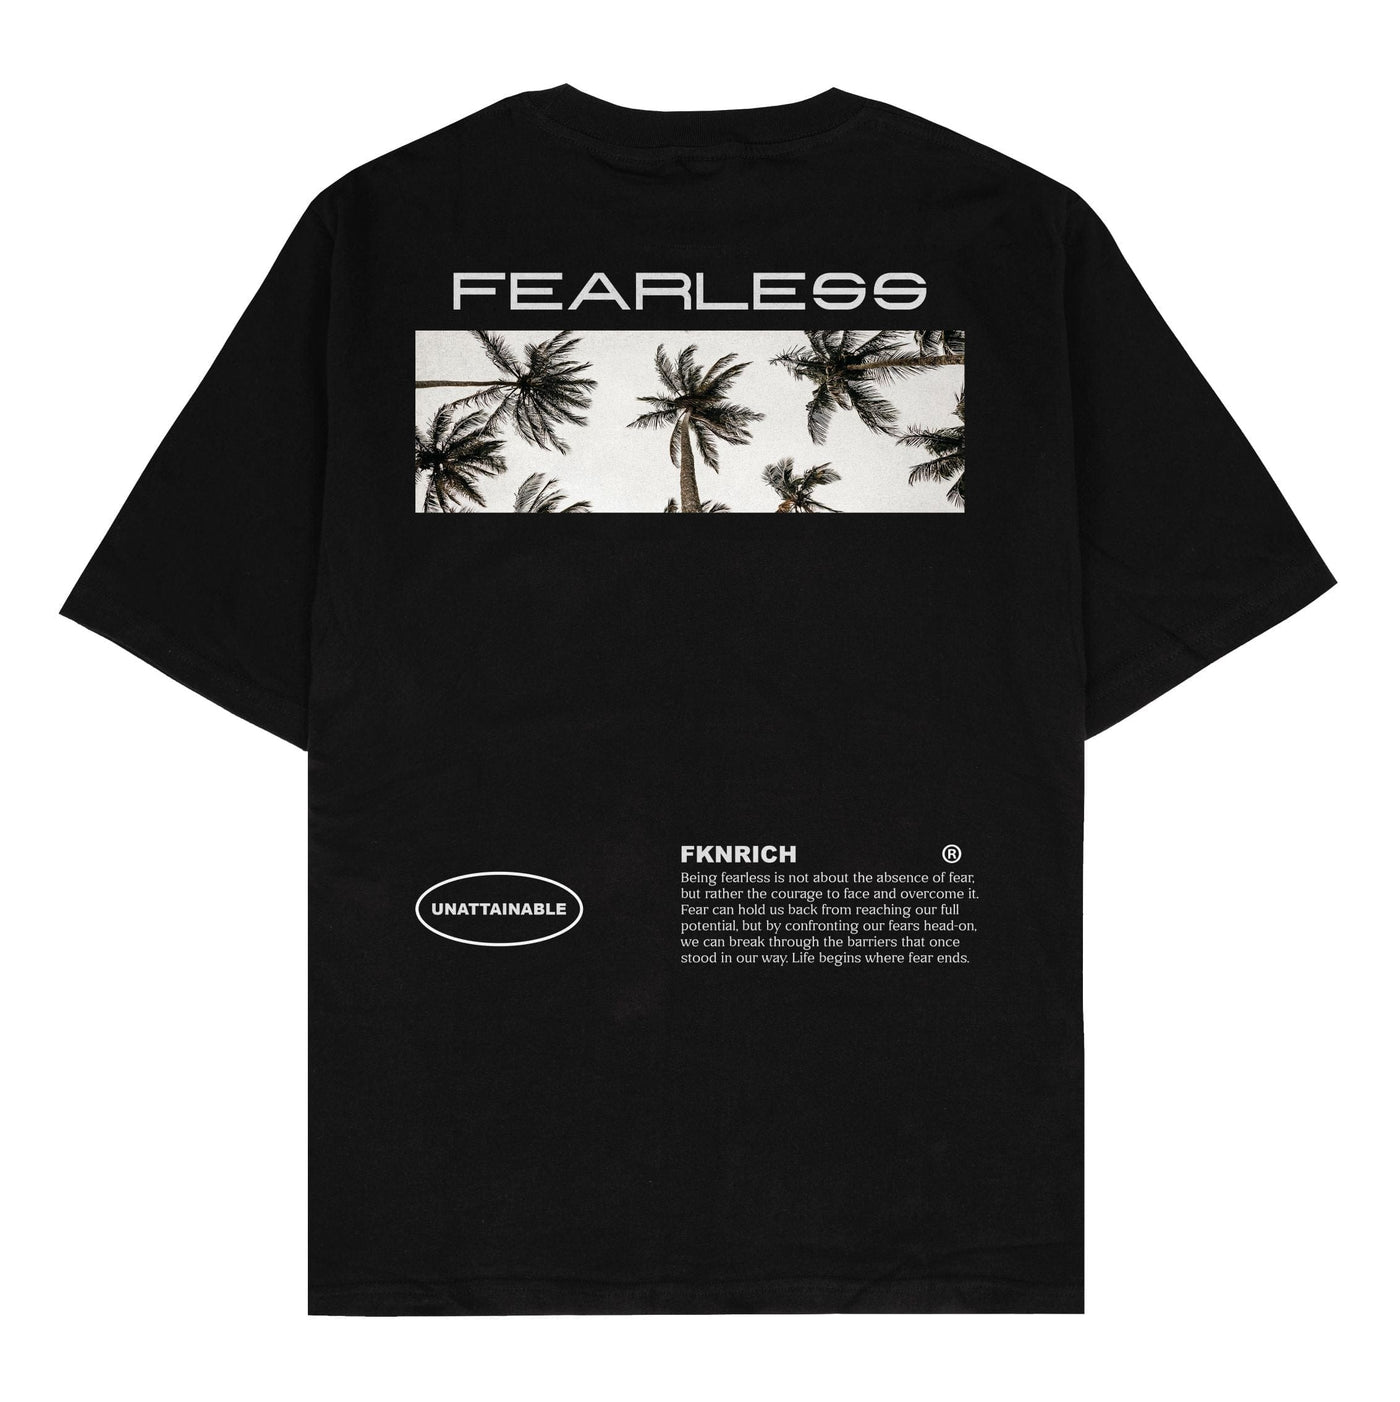 Fearless Tee (Signature Series) - FKN Rich